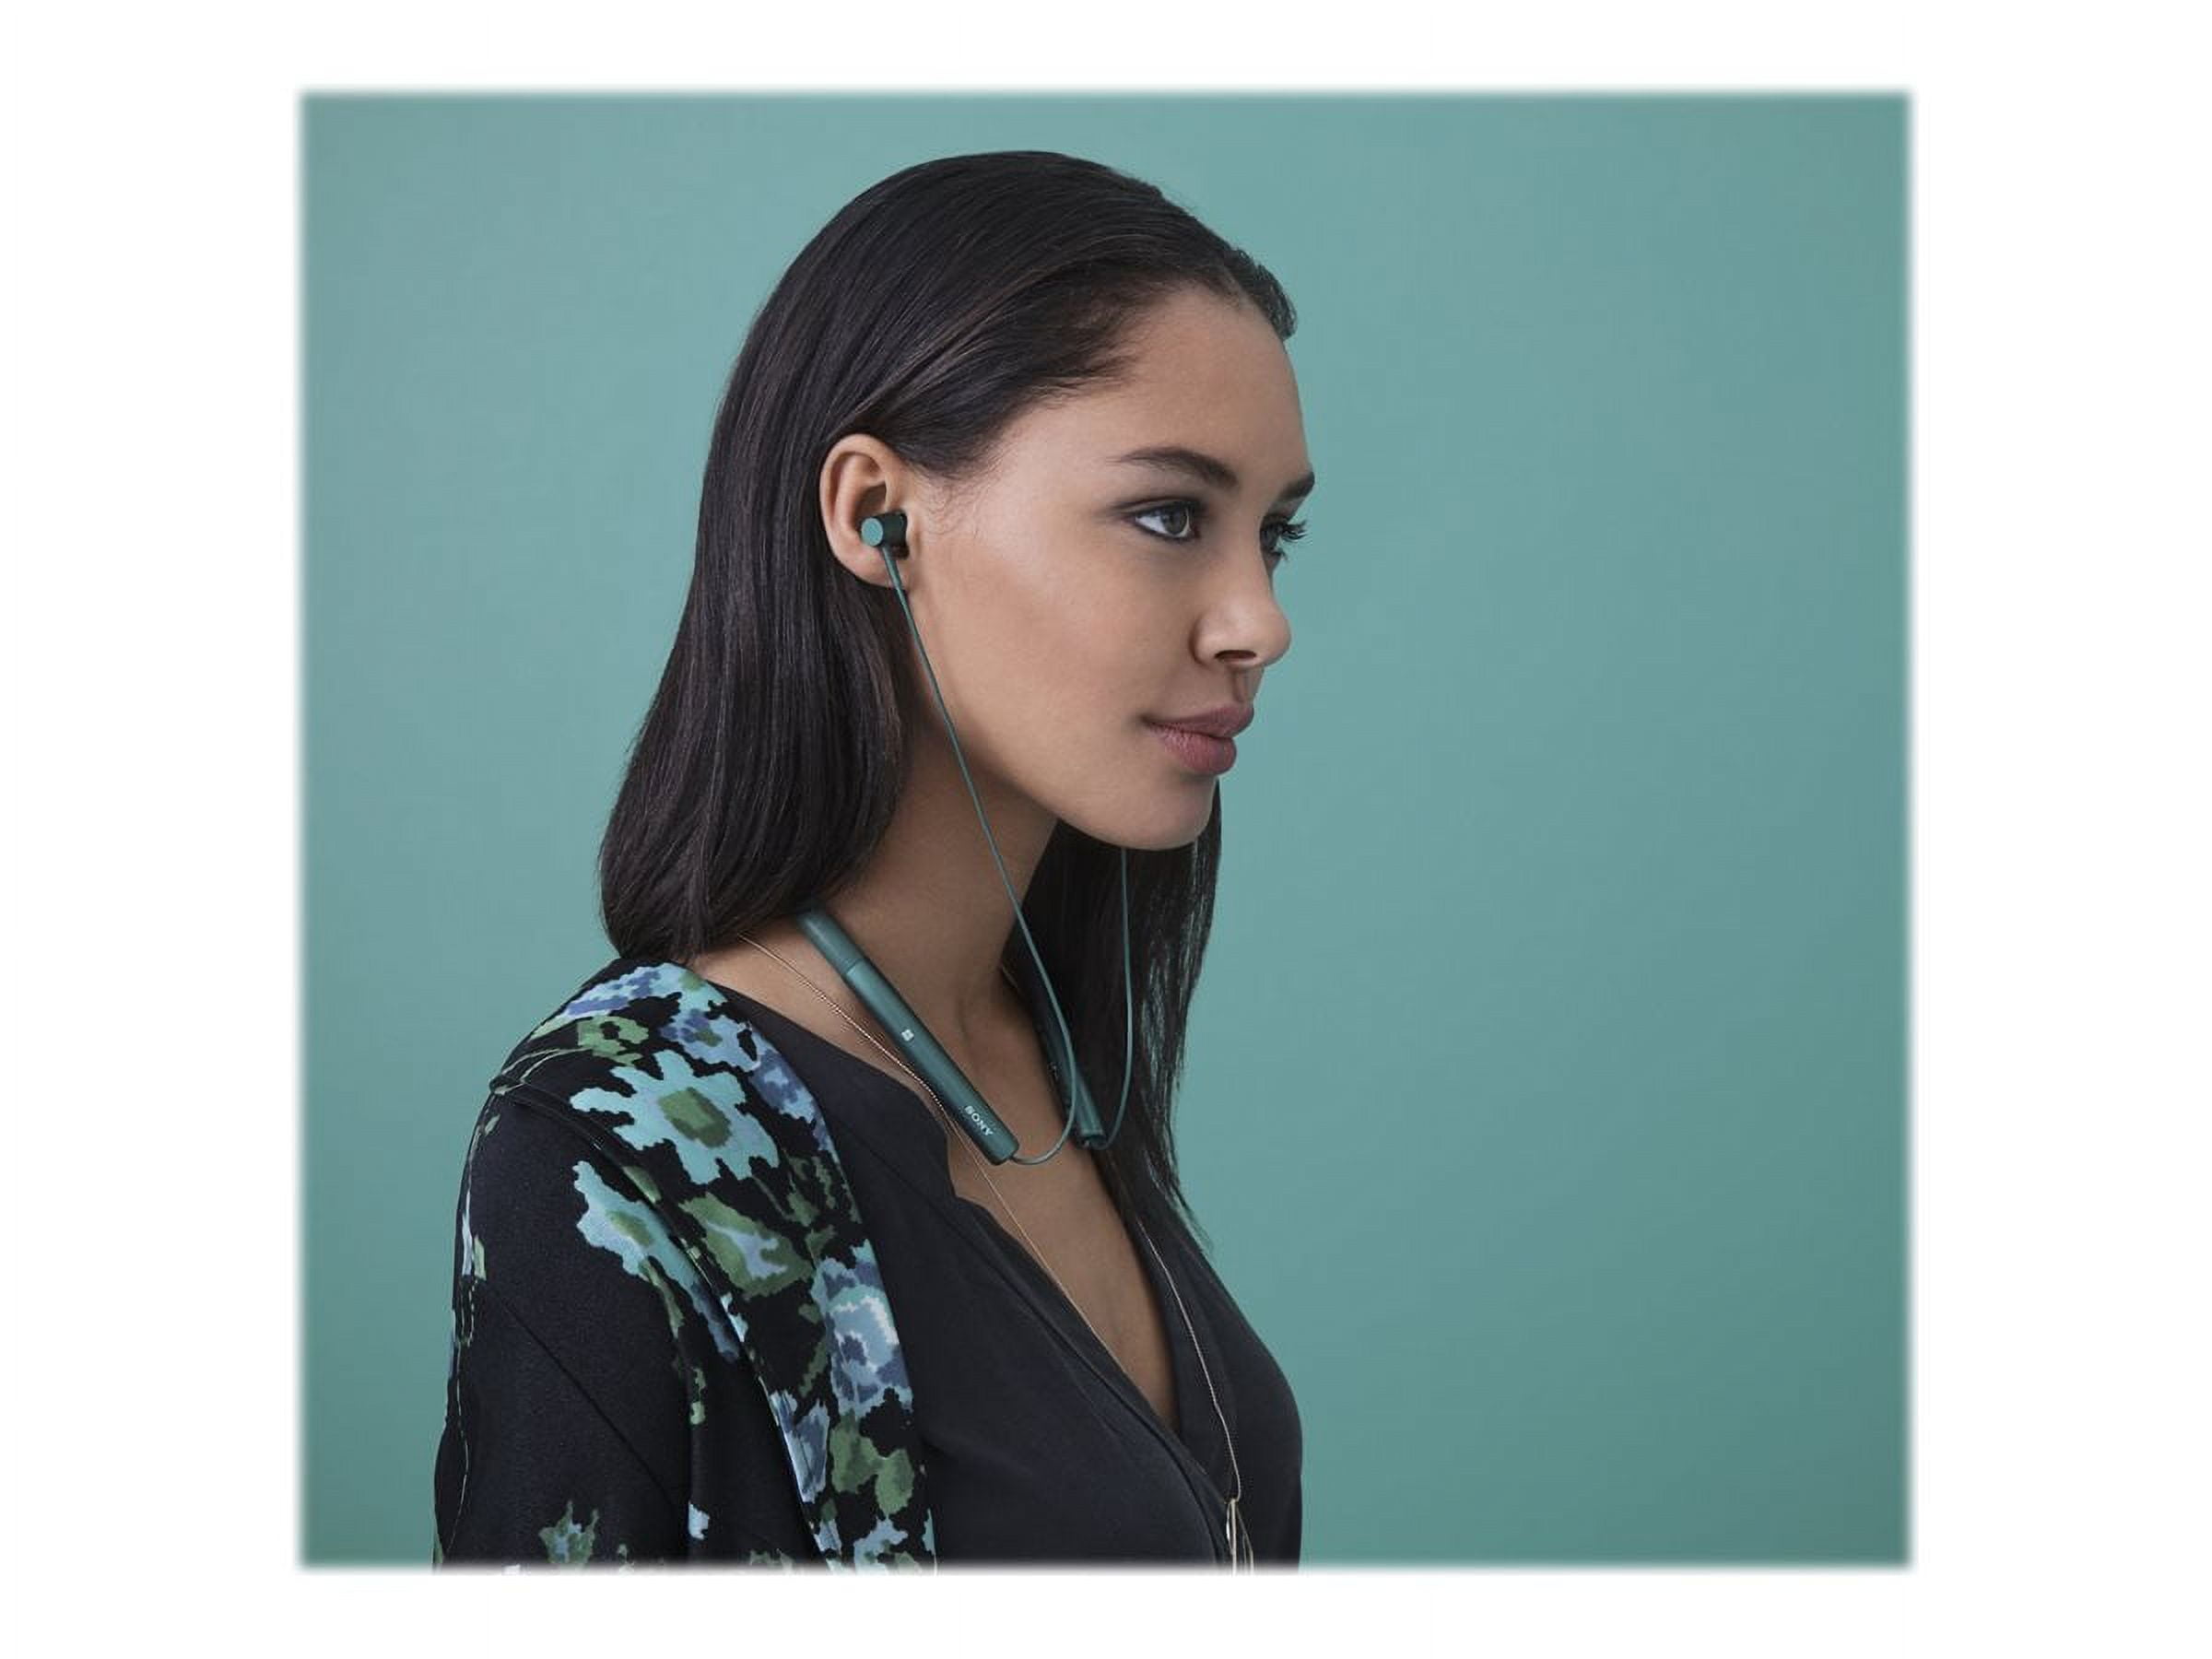 ✓ Auriculares Inalámbricos Sony MDREX750BTB Bluetooth NFC y LDAC, A